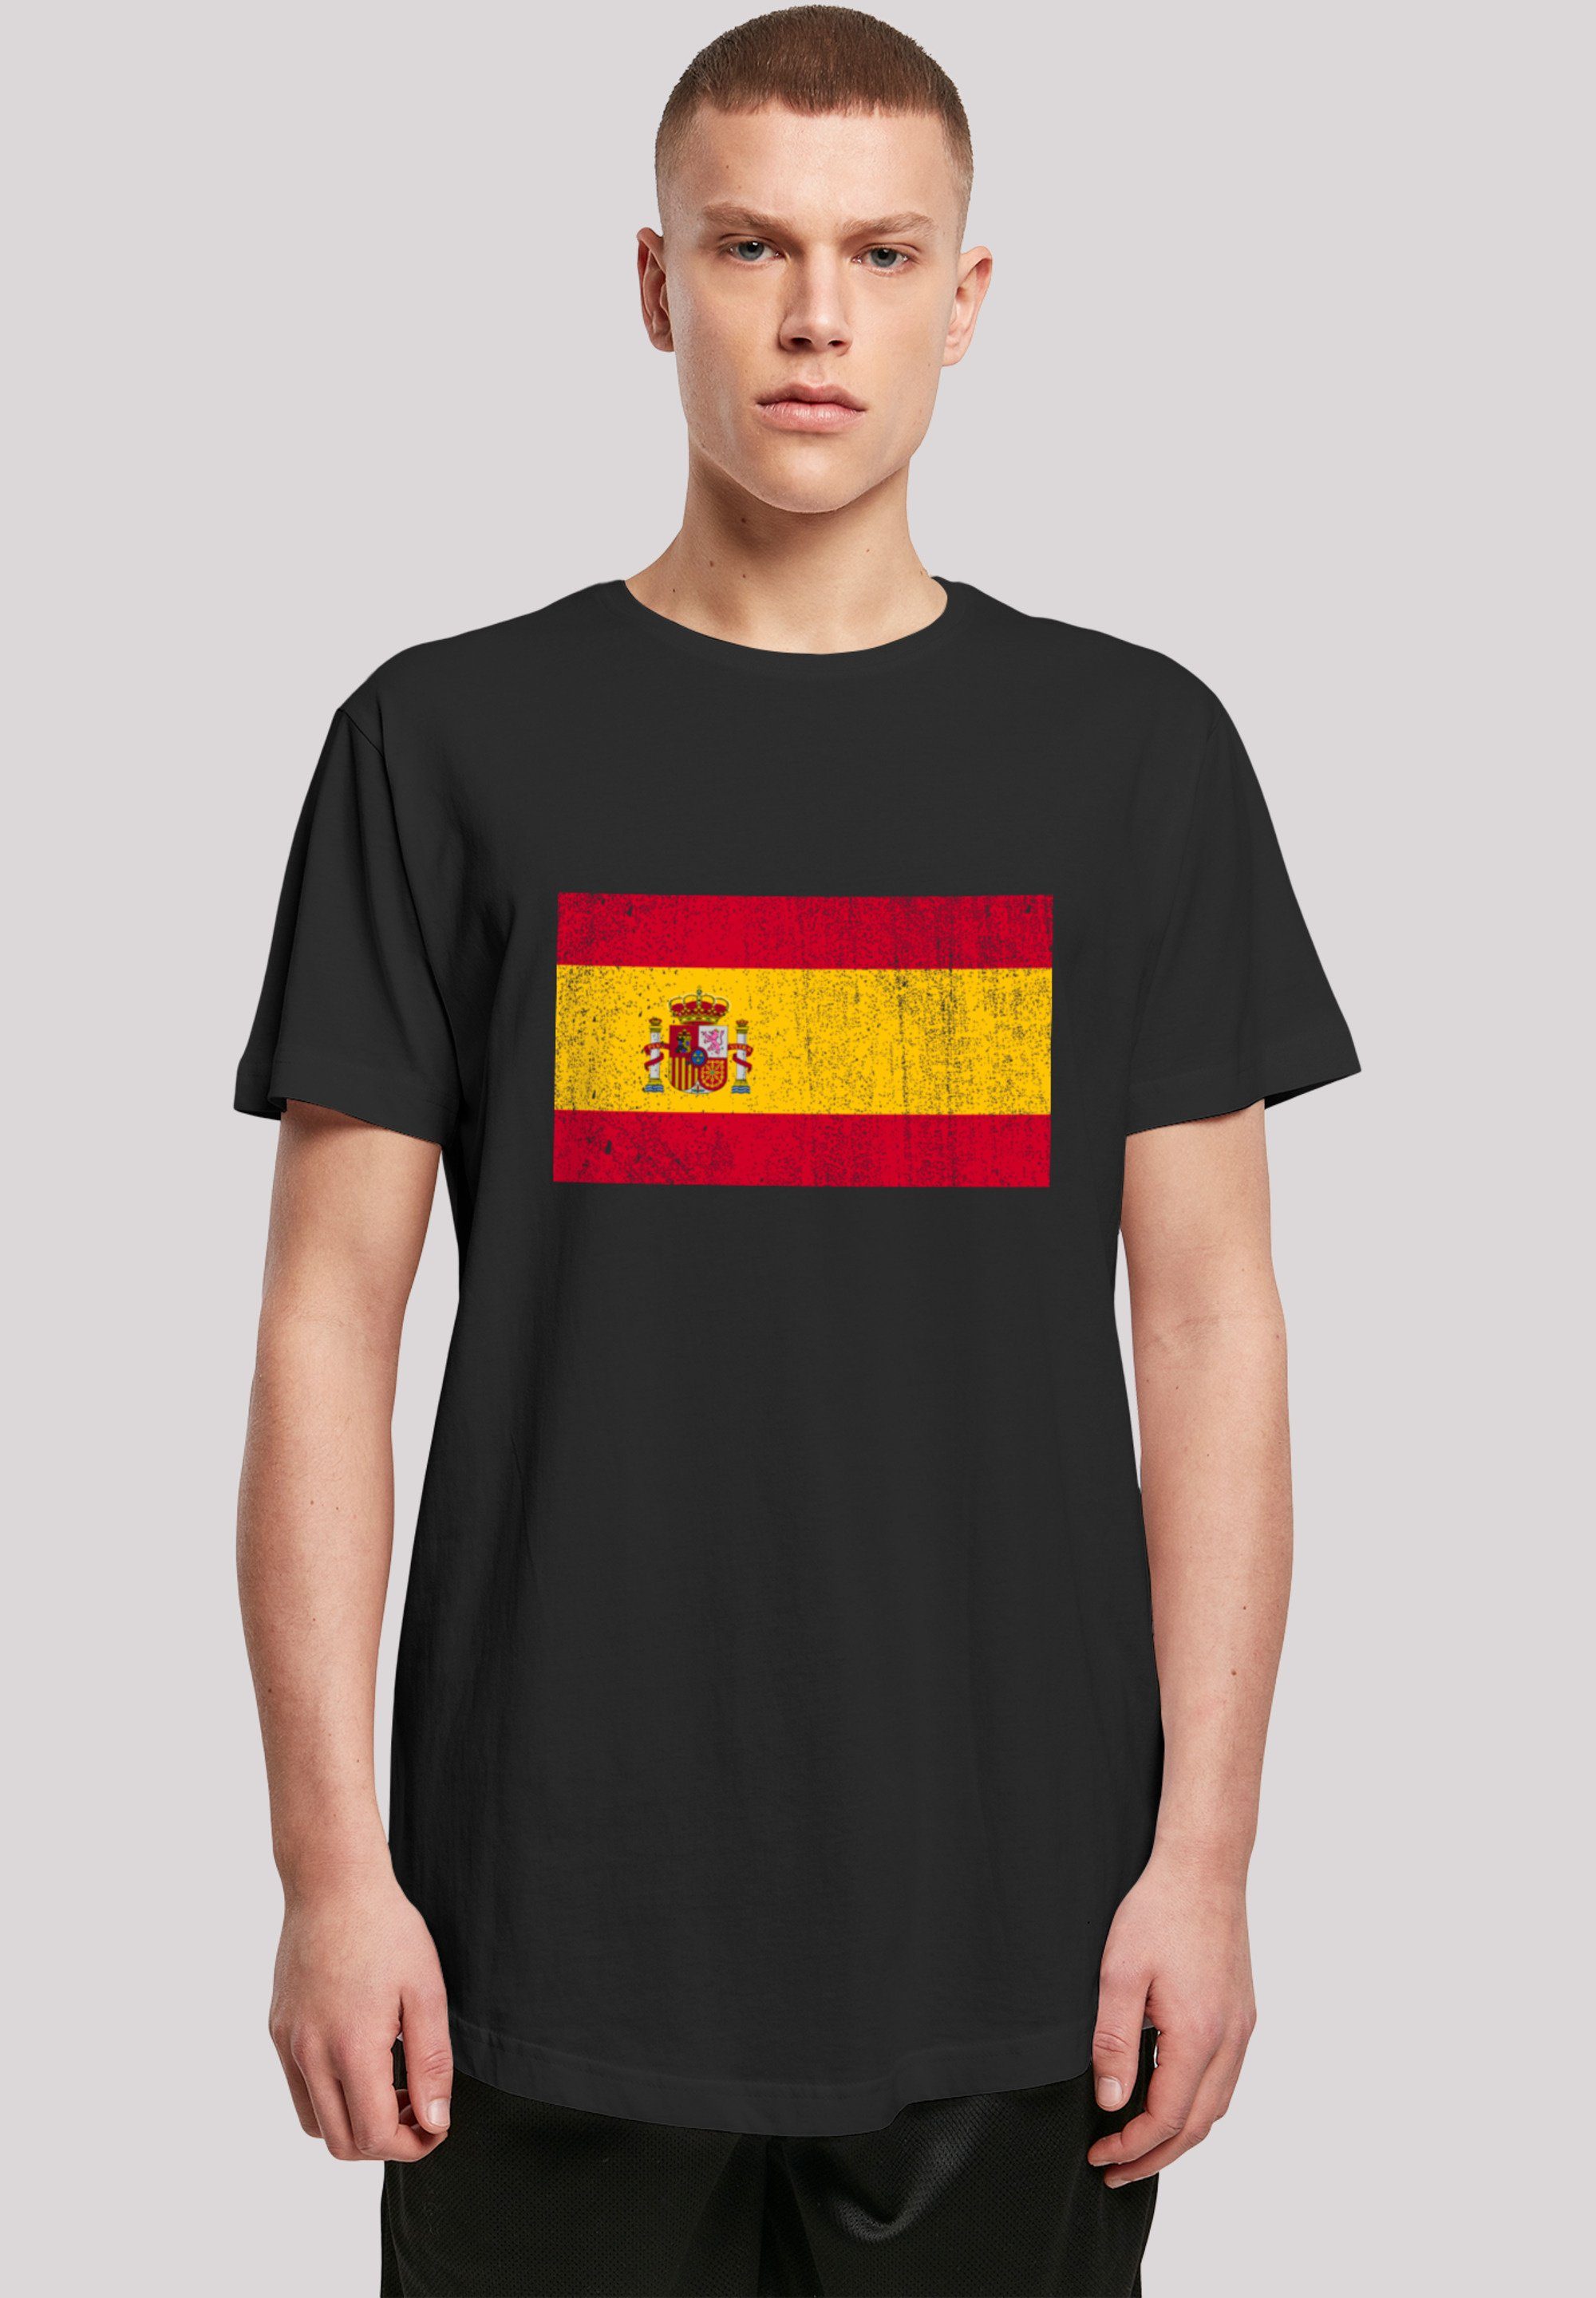 cm trägt Das F4NT4STIC Spain Größe ist T-Shirt Model distressed Flagge groß M Spanien Print, 180 und